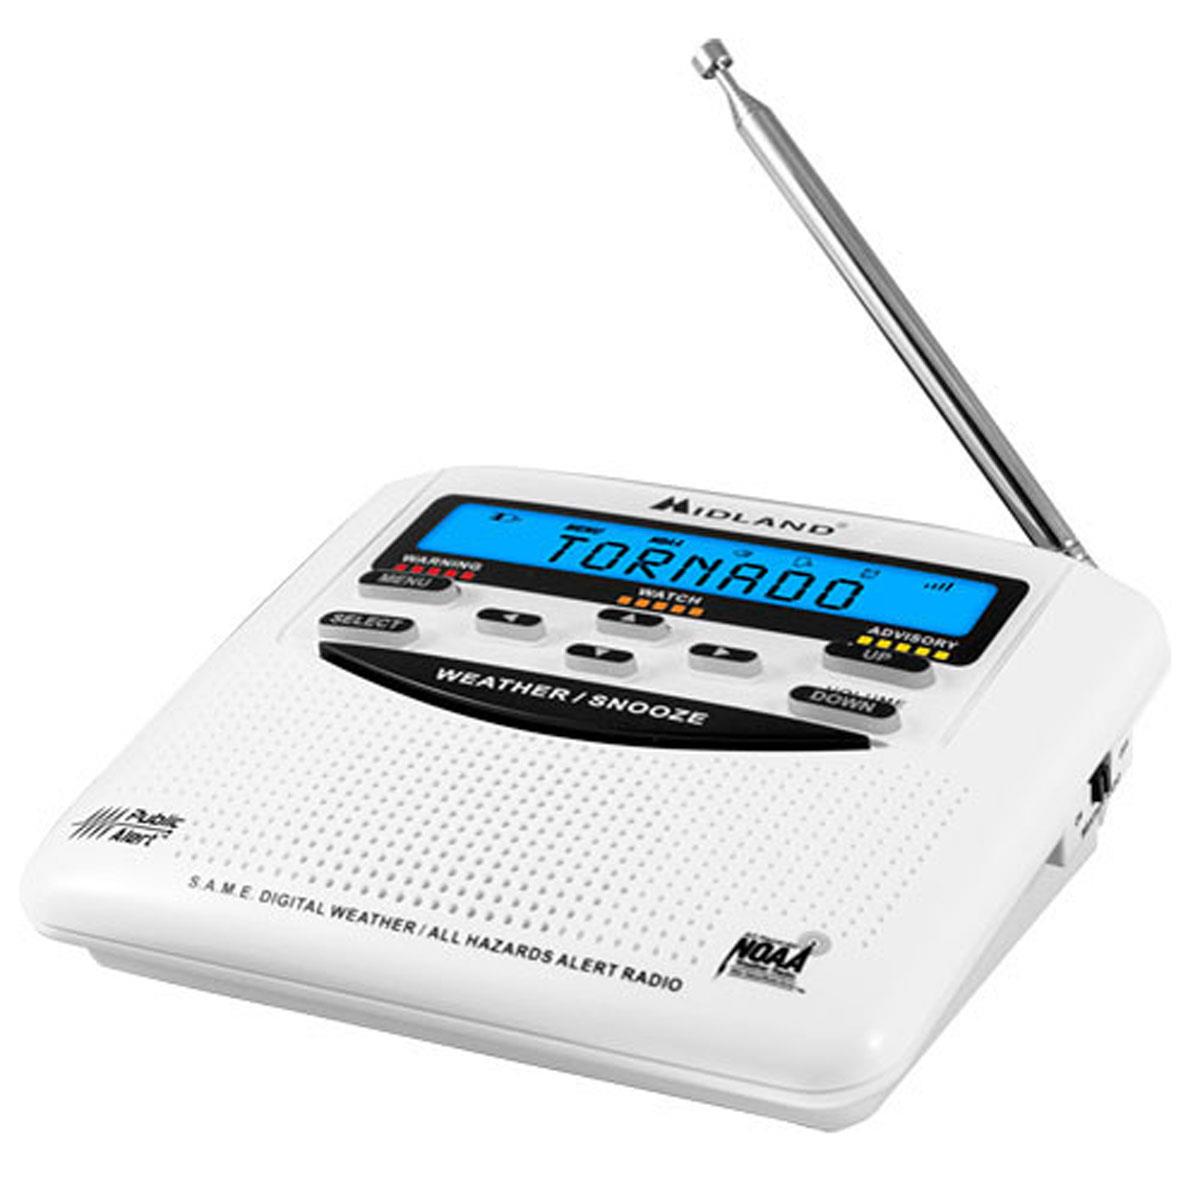 Image of Midland WR-120 Emergency Weather Alert Radio with Alarm Clock